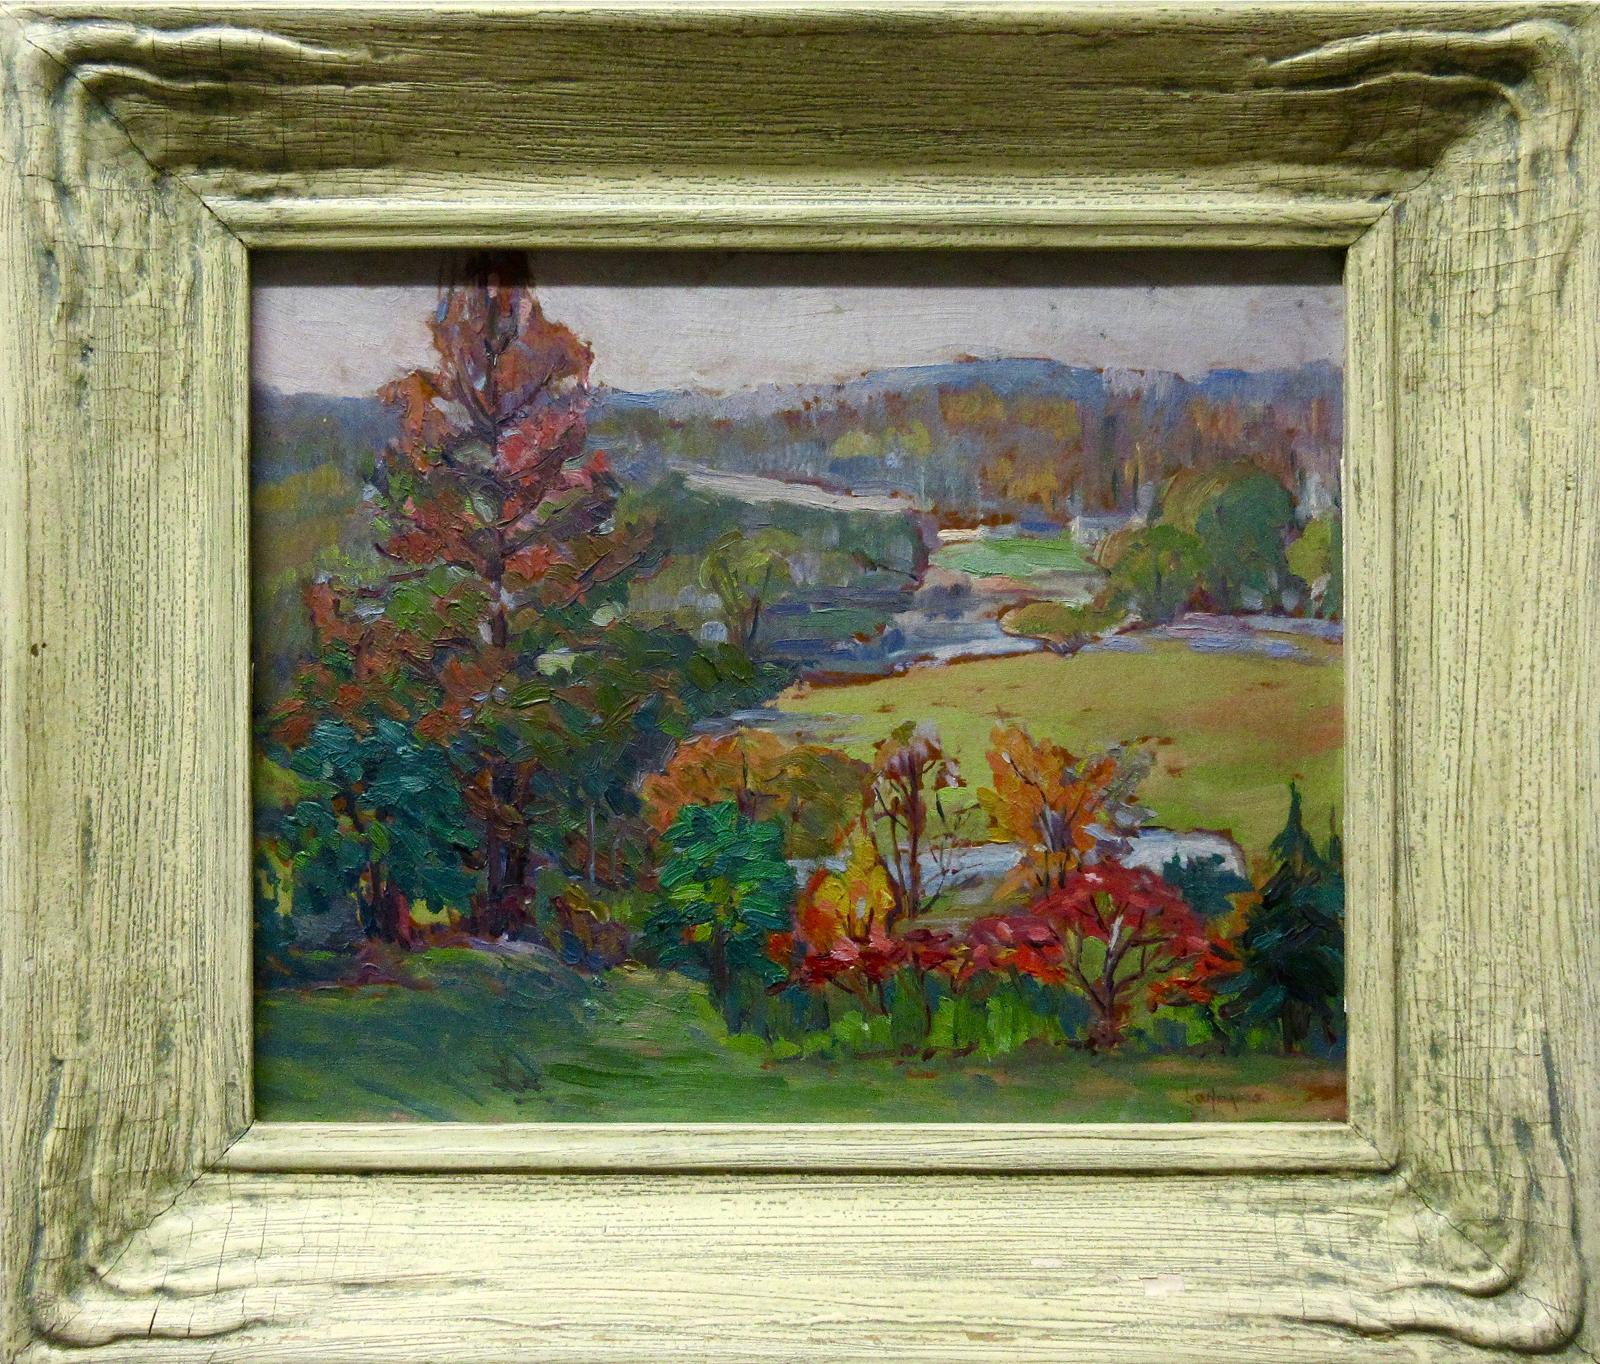 Lily Osman Adams (1865-1945) - Untitled (Autumn Landscape)